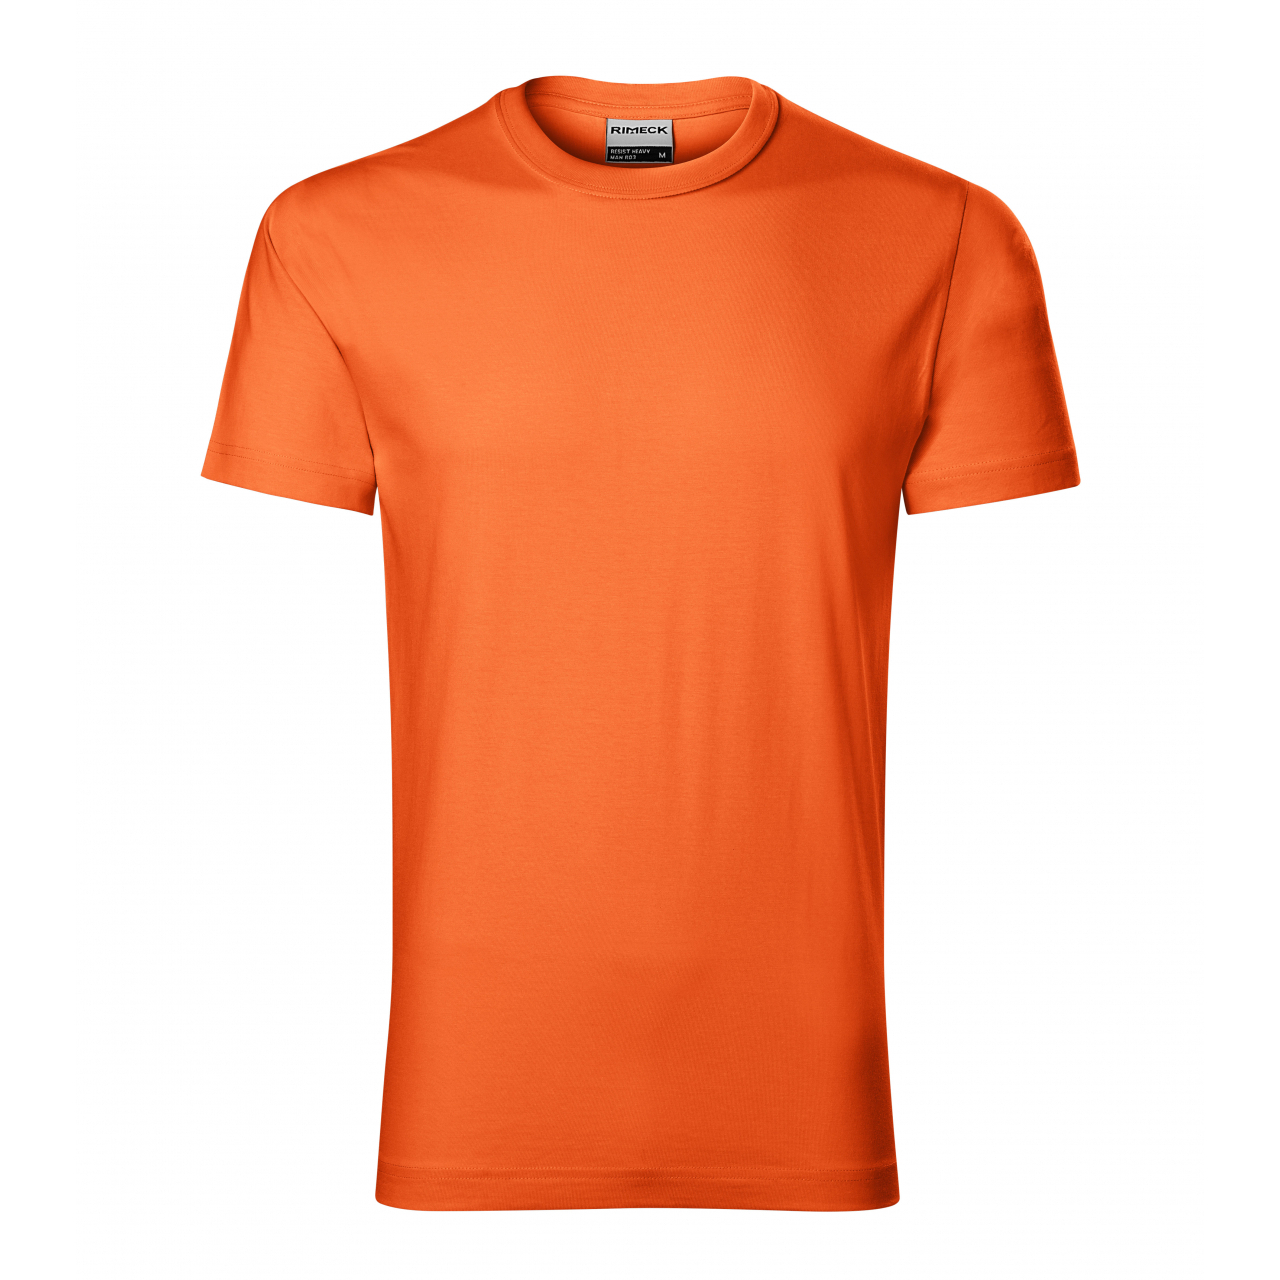 Tričko pánské Rimeck Resist - oranžové, XL